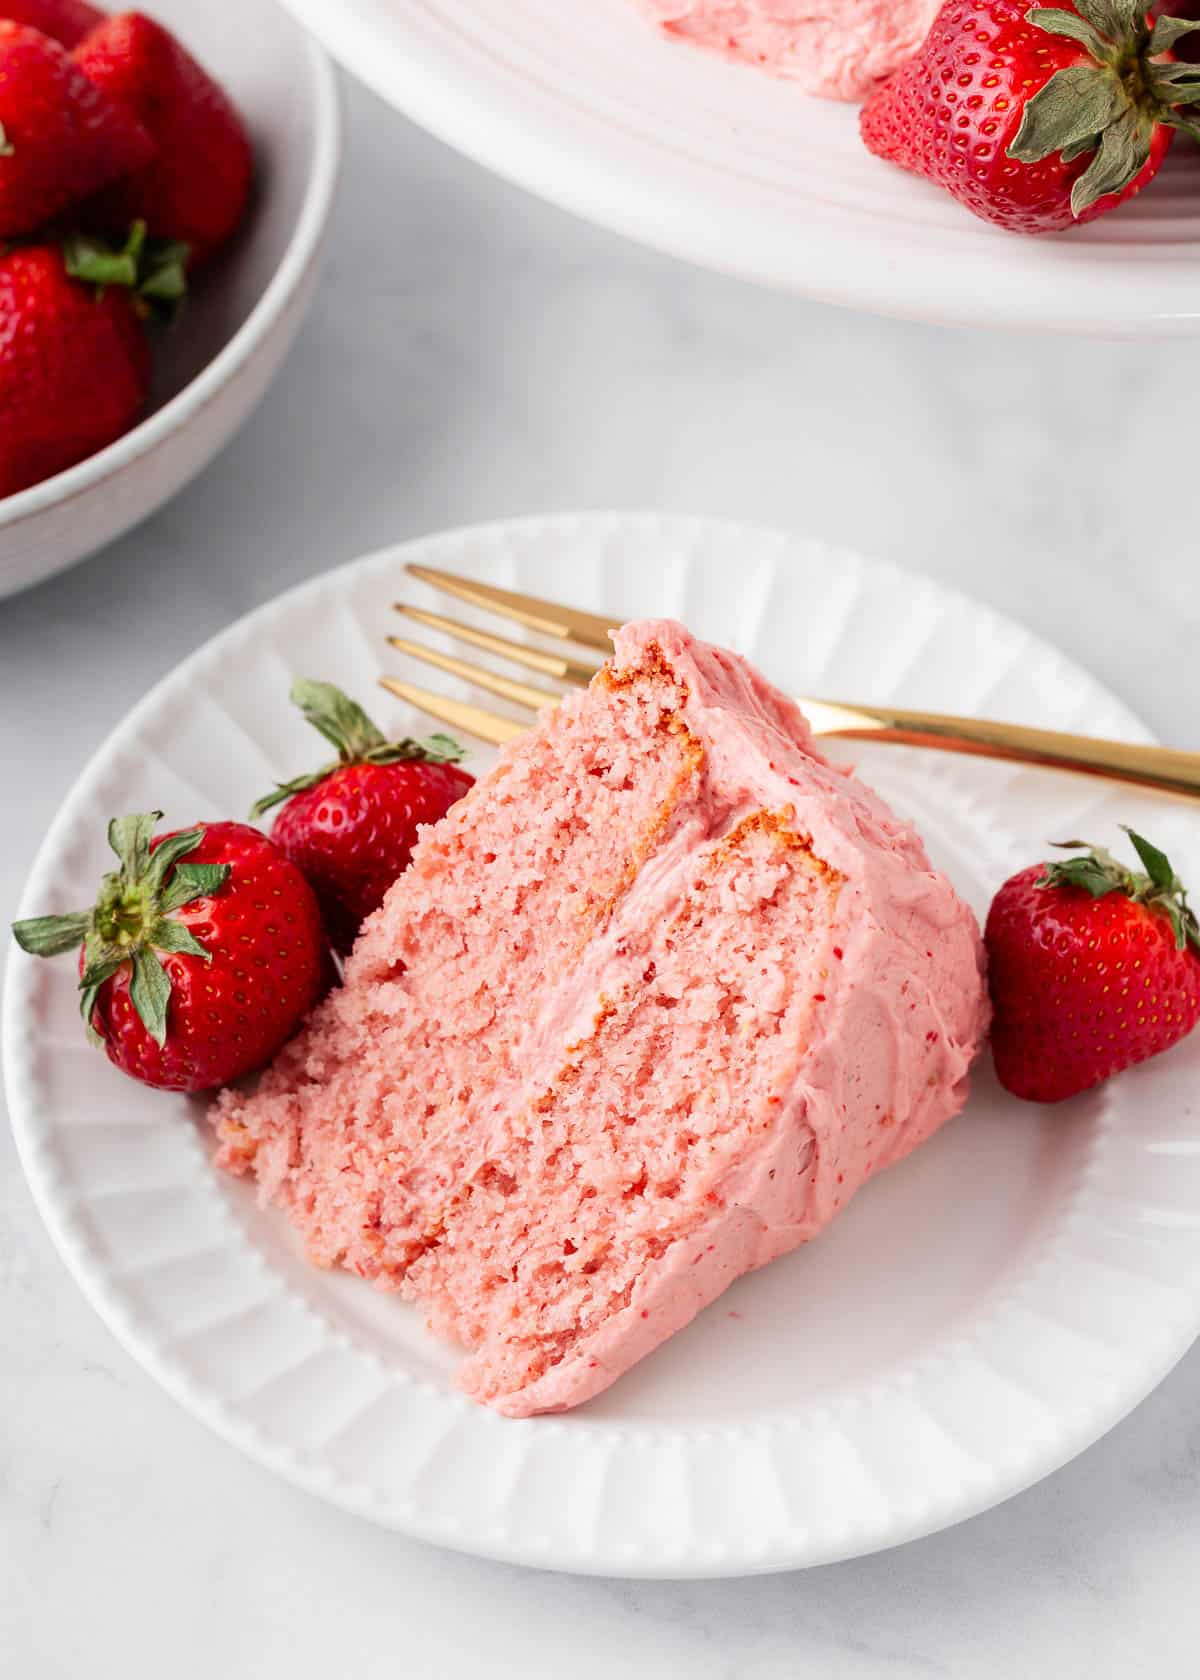 Slice of strawberry cake with fresh strawberries.